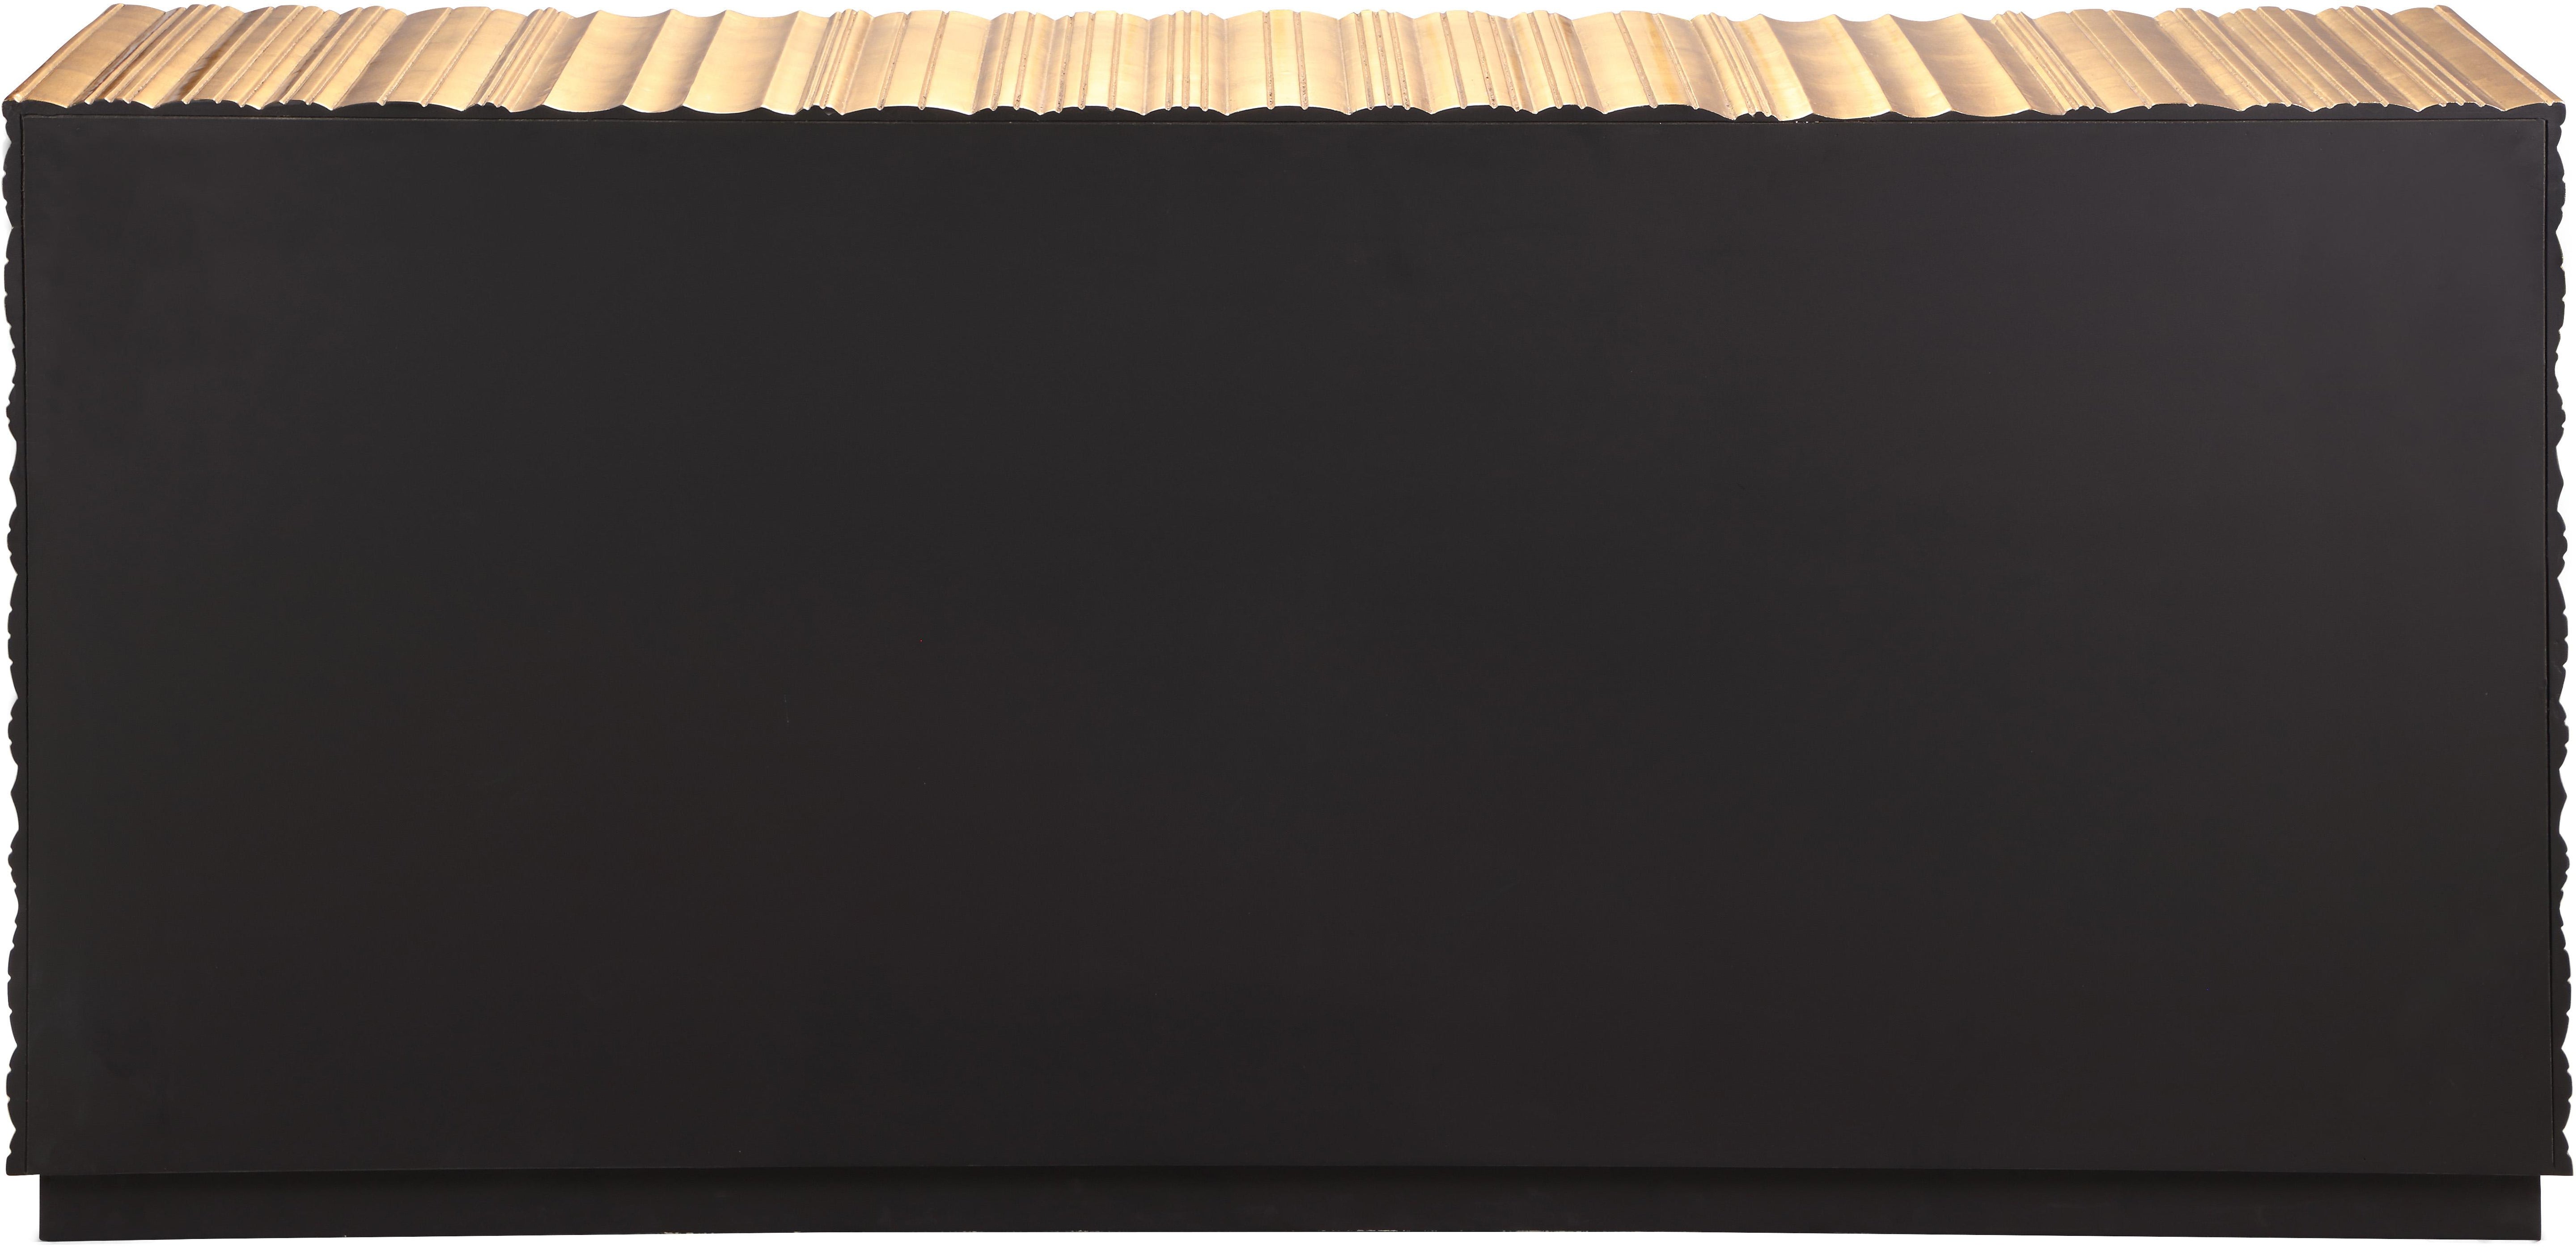 Golda Gold Leaf Sideboard/Buffet - Luxury Home Furniture (MI)